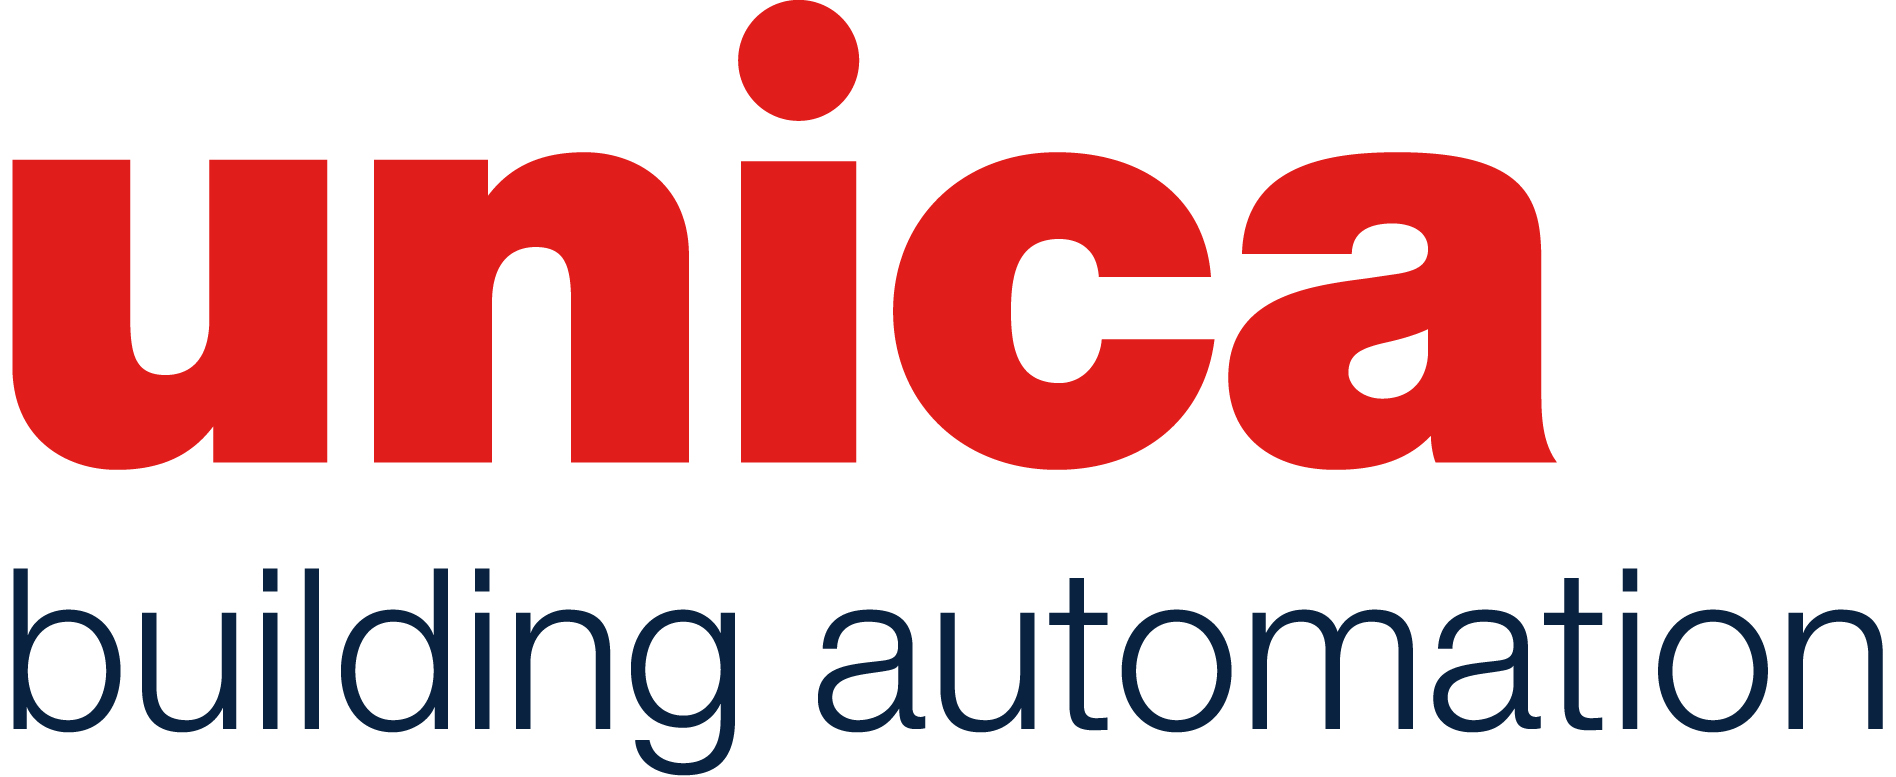 Unica Building Automation BV FHI, federatie van technologiebranches